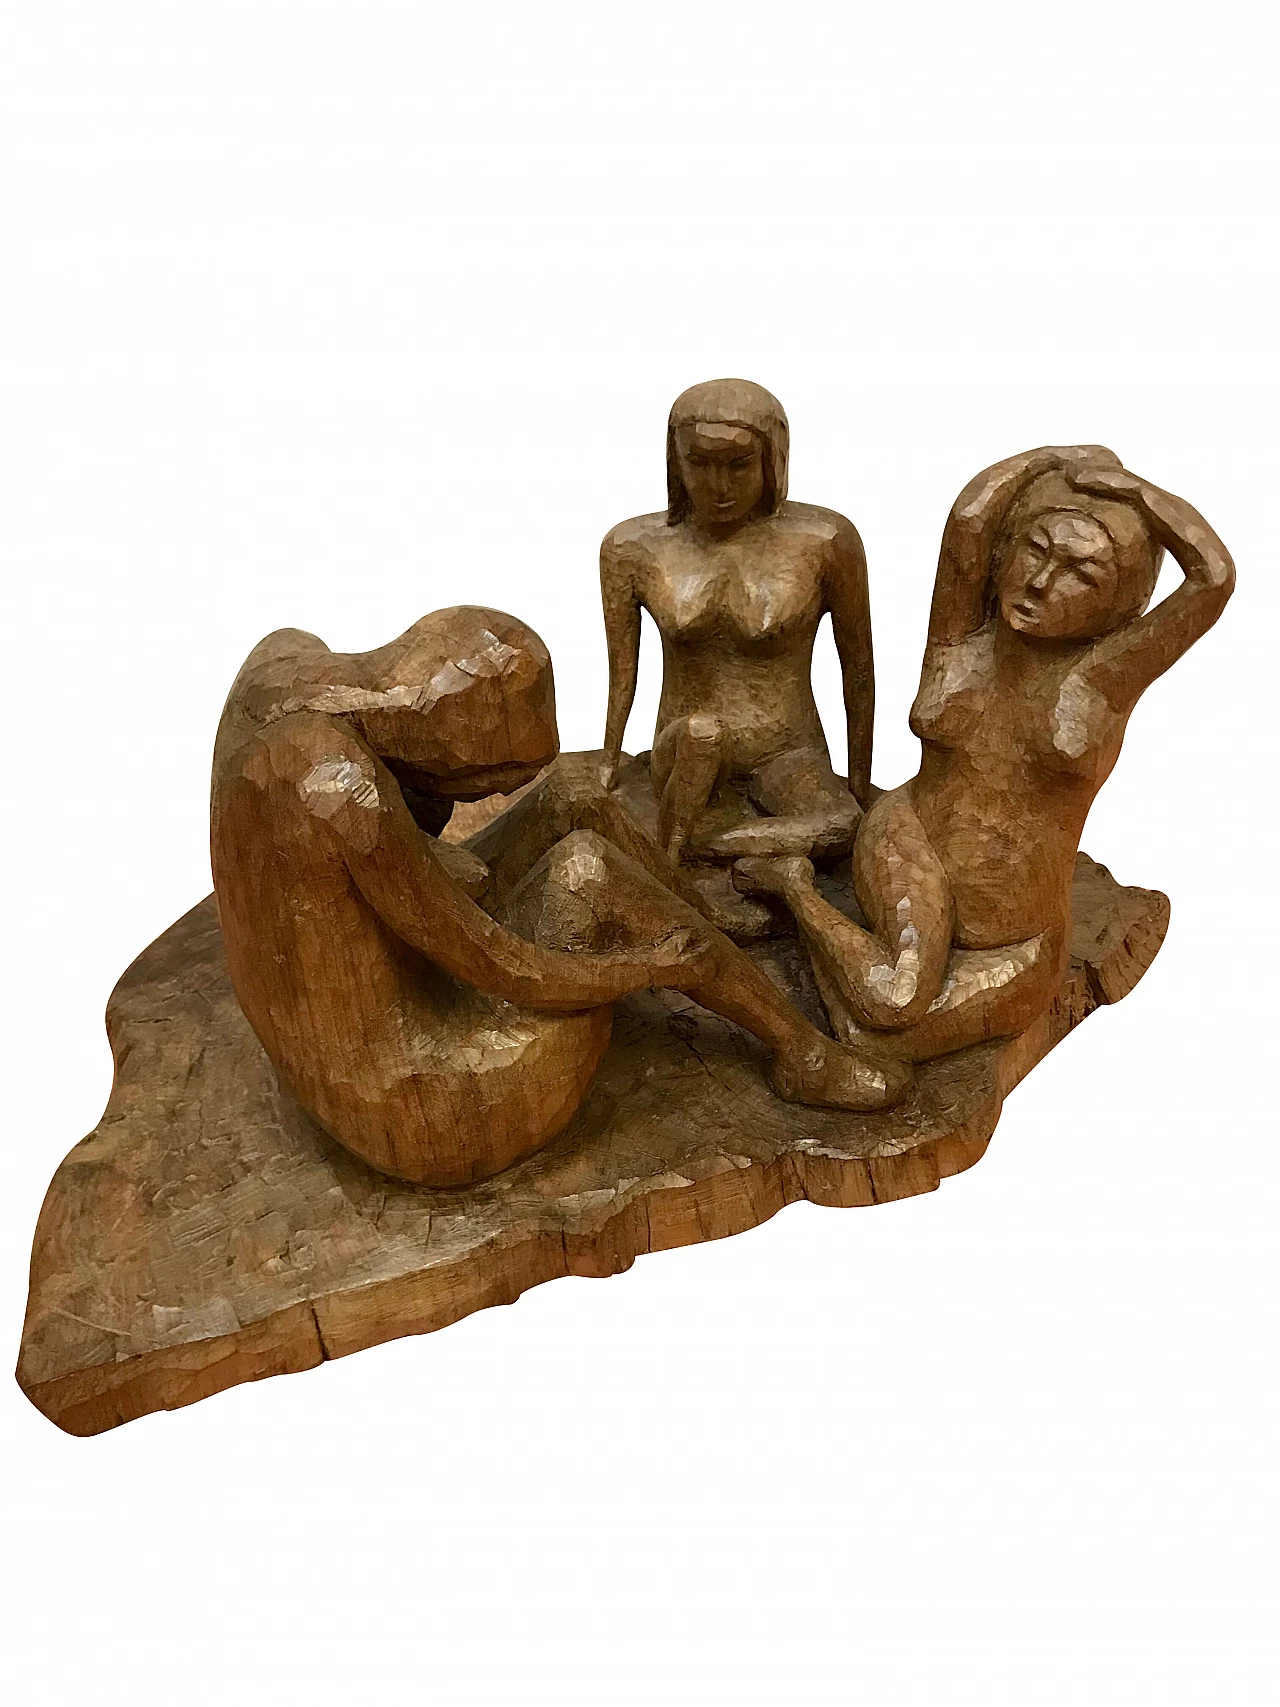 Wooden sculpture by Luigi Sala, Seregno '97 1258576